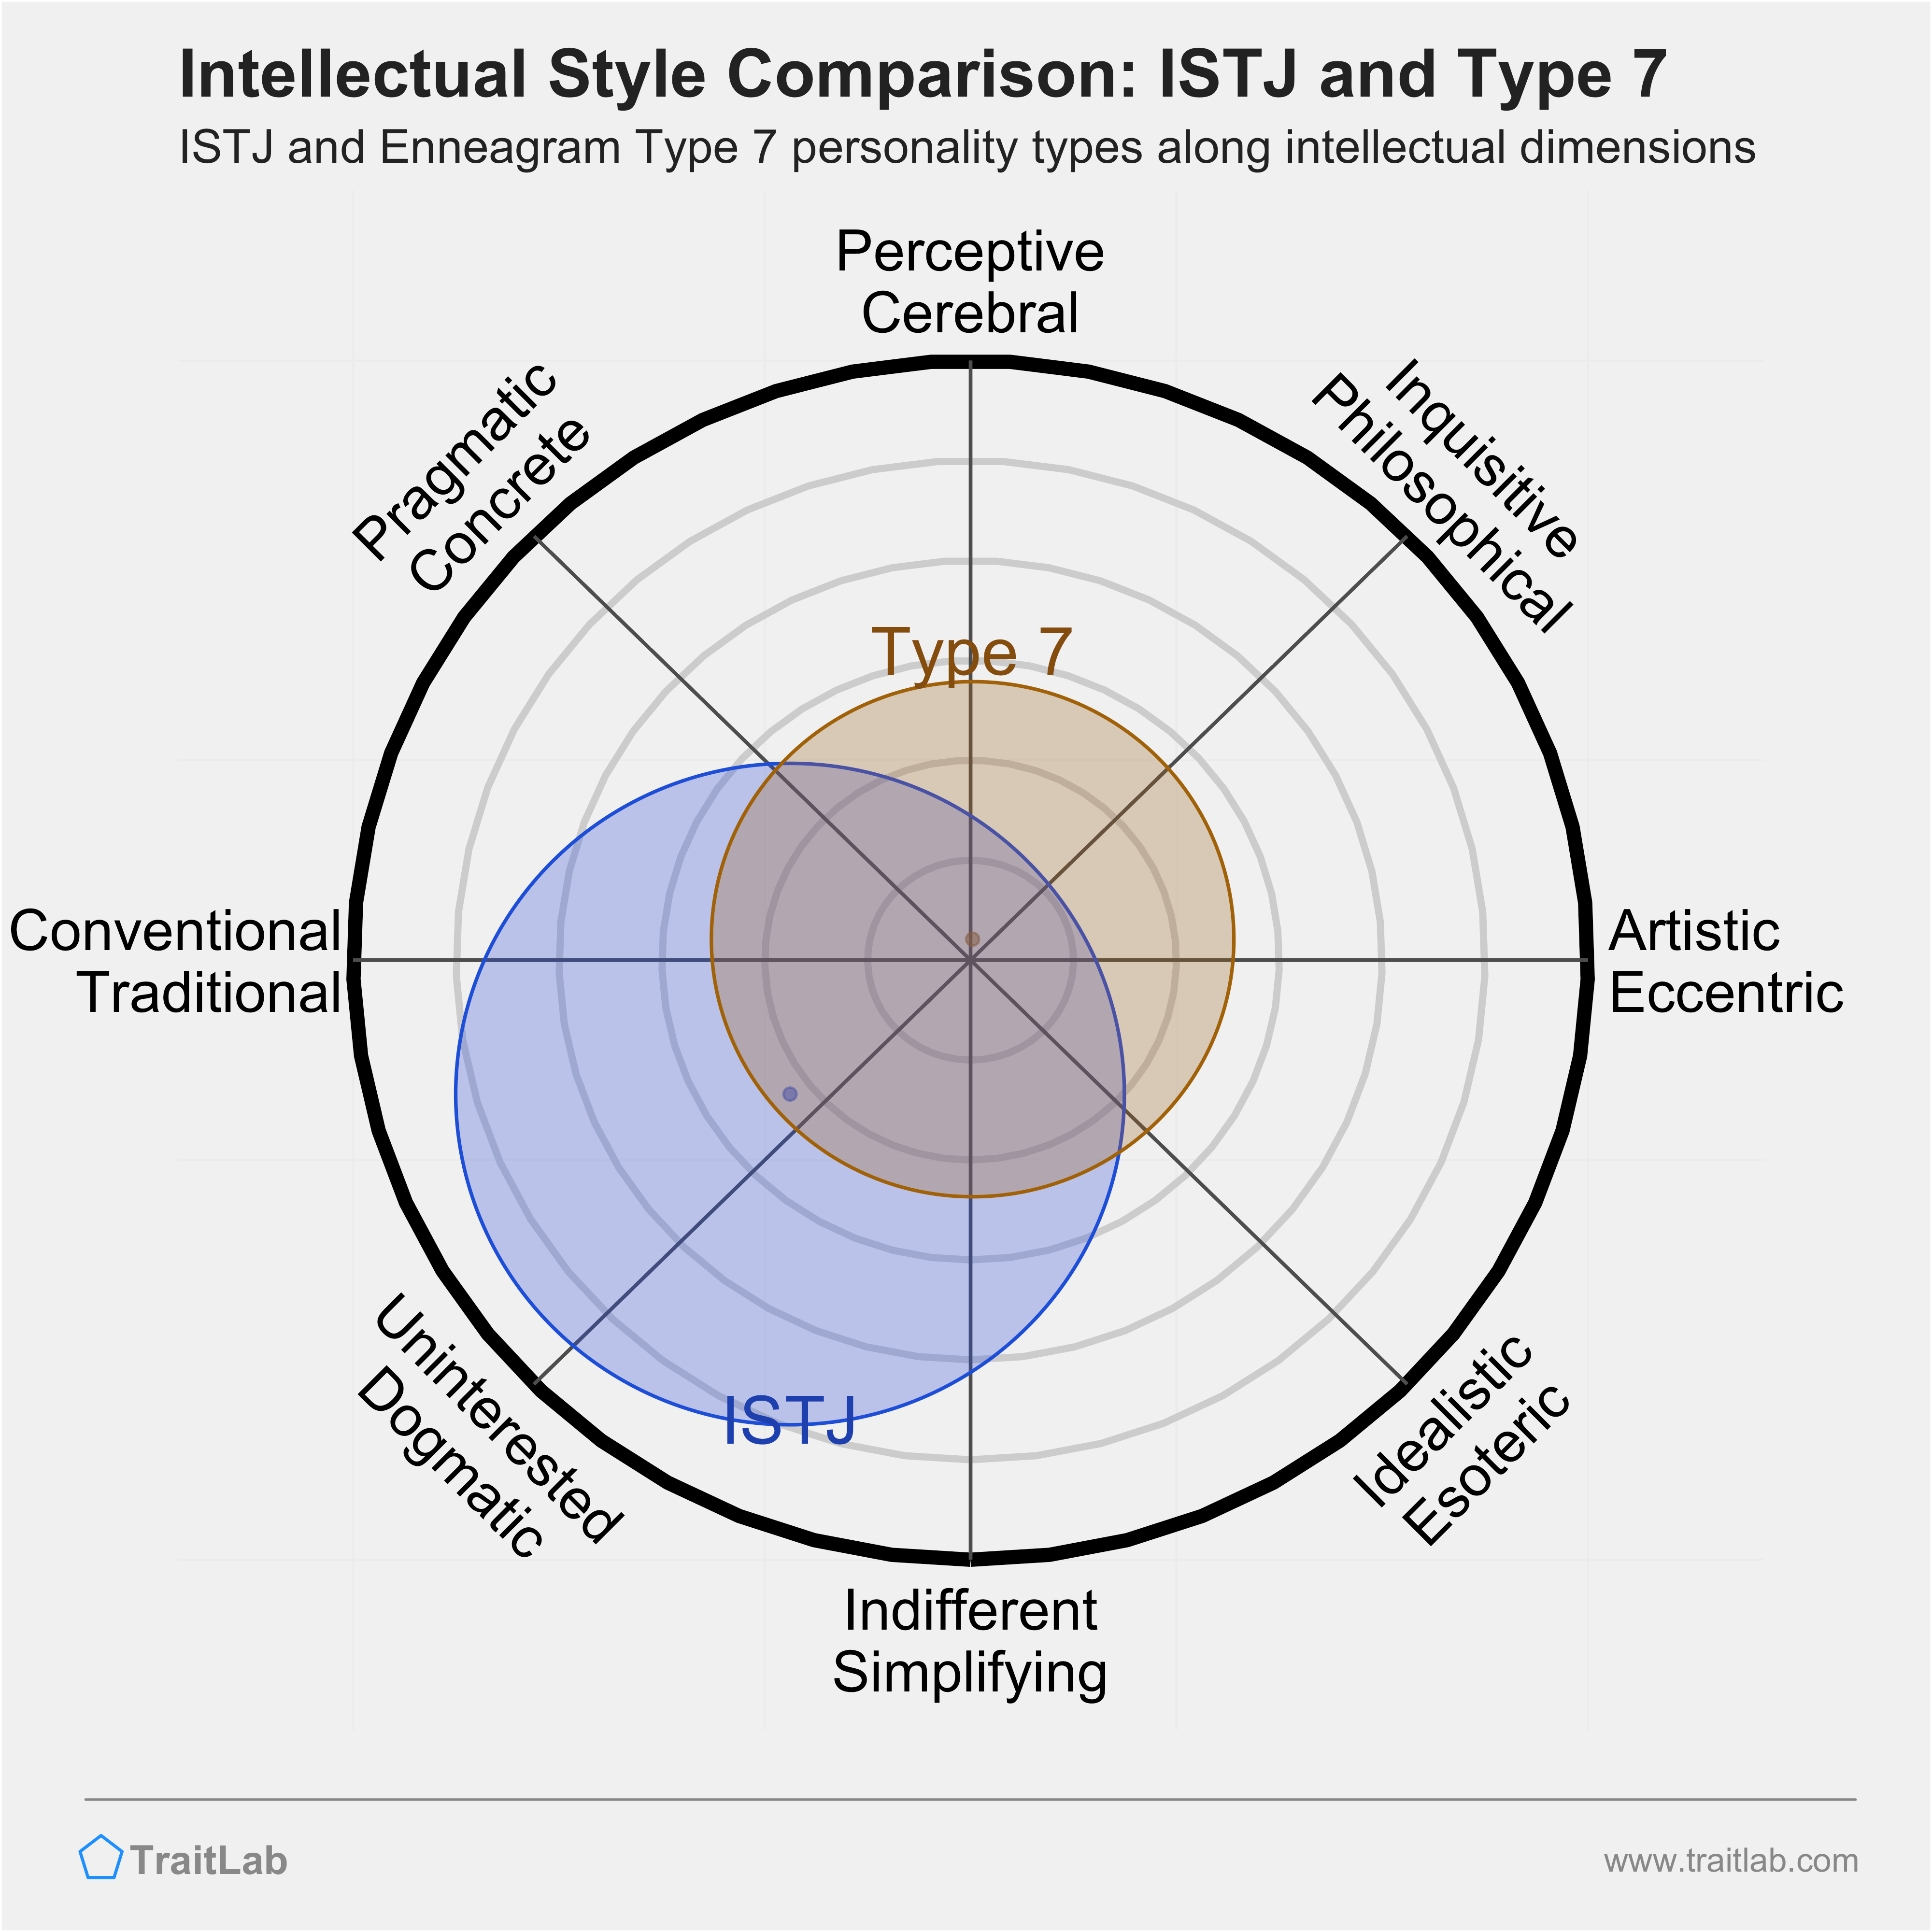 ISTJ and Type 7 comparison across intellectual dimensions